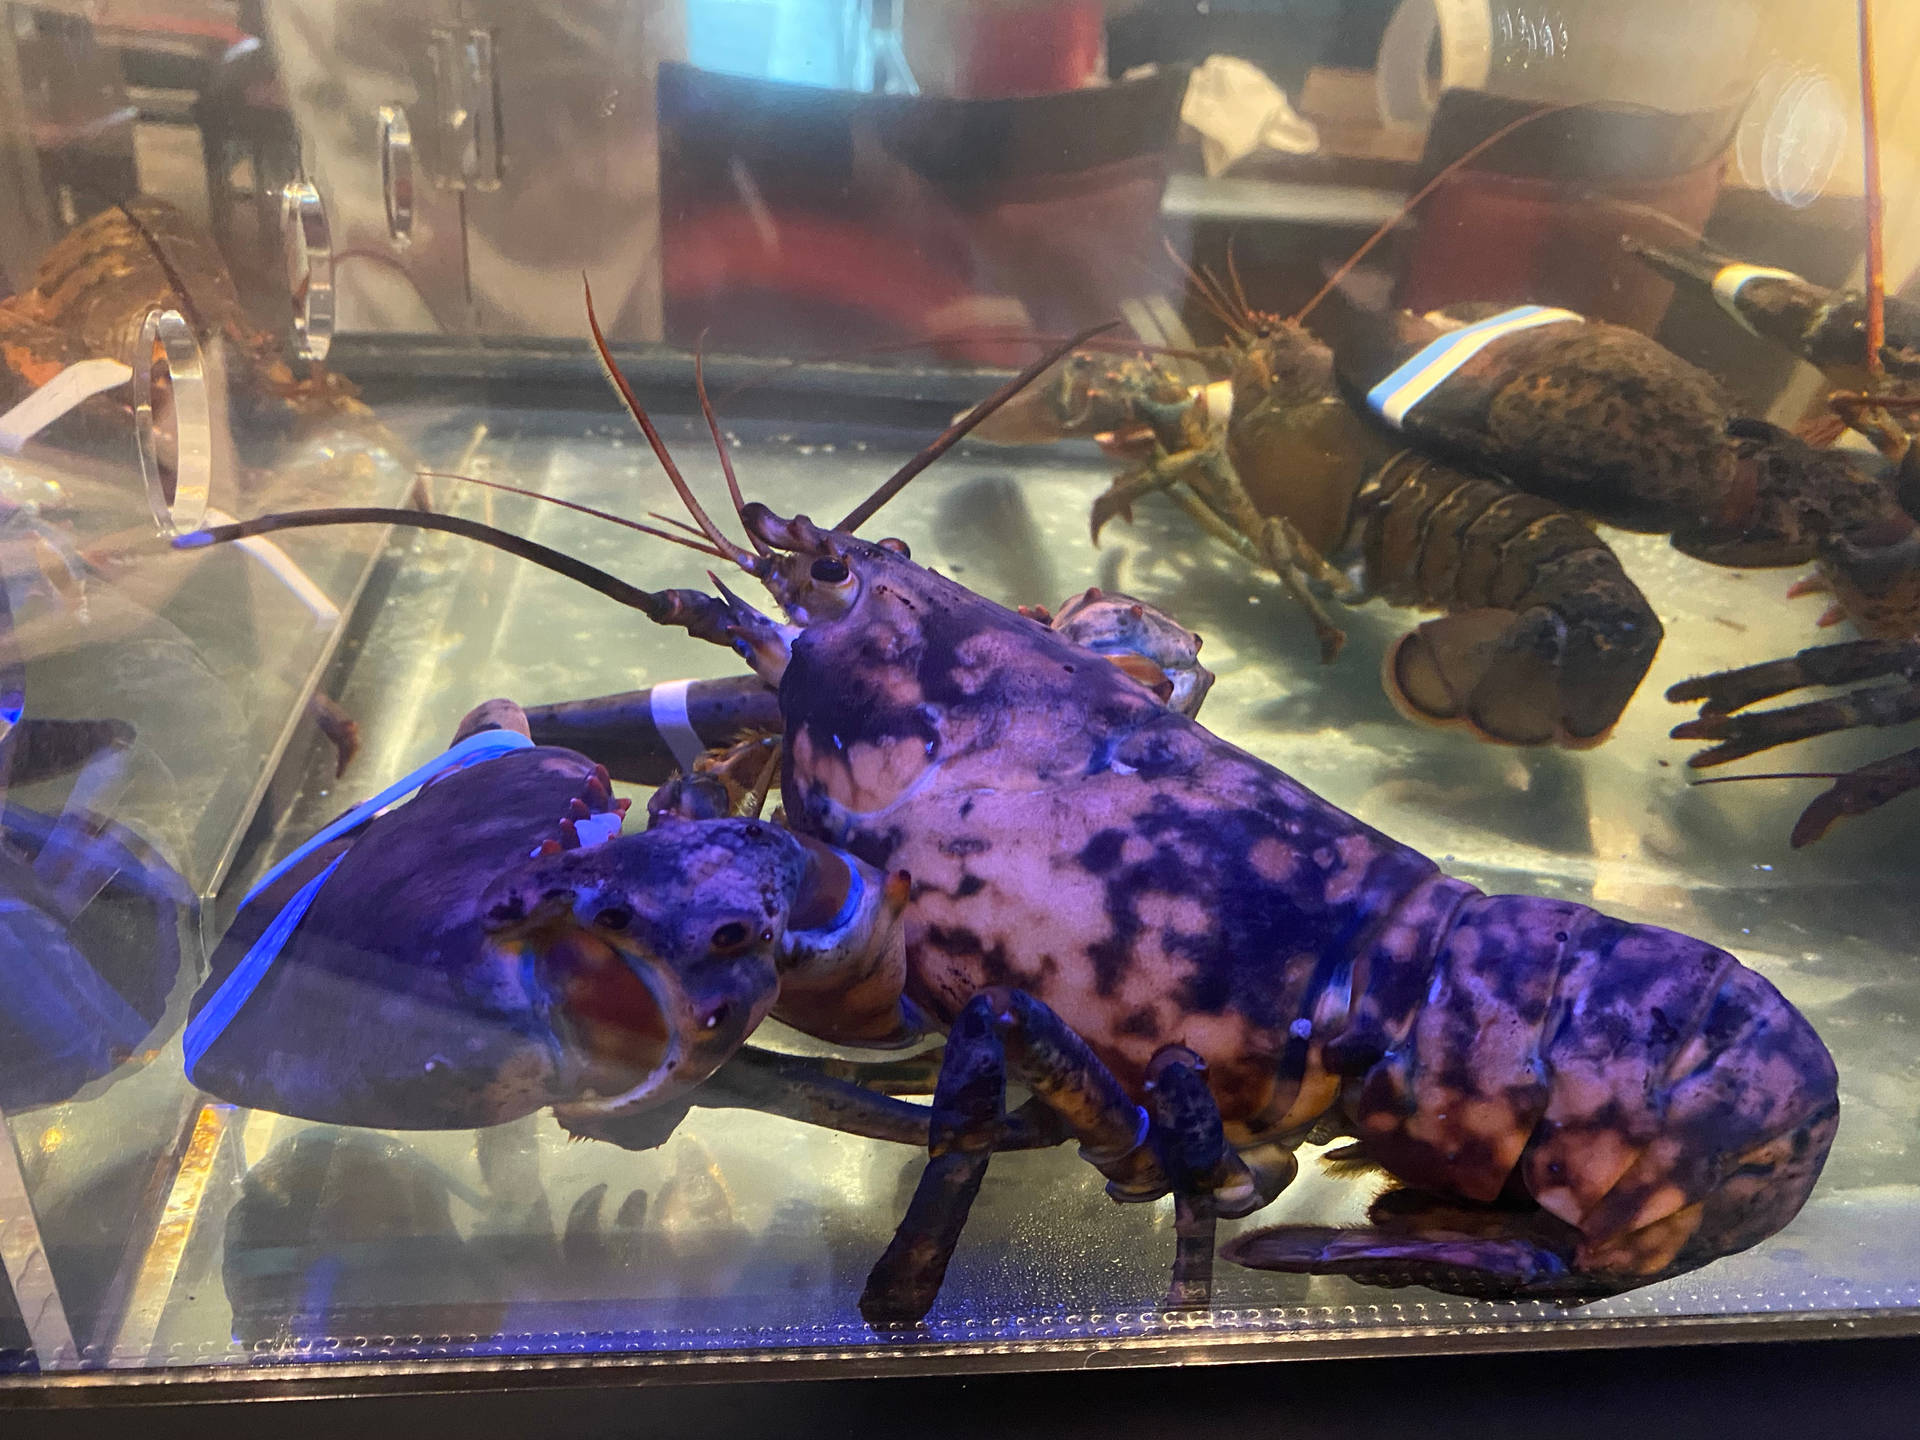 Purple Lobster Inside Of Aquarium